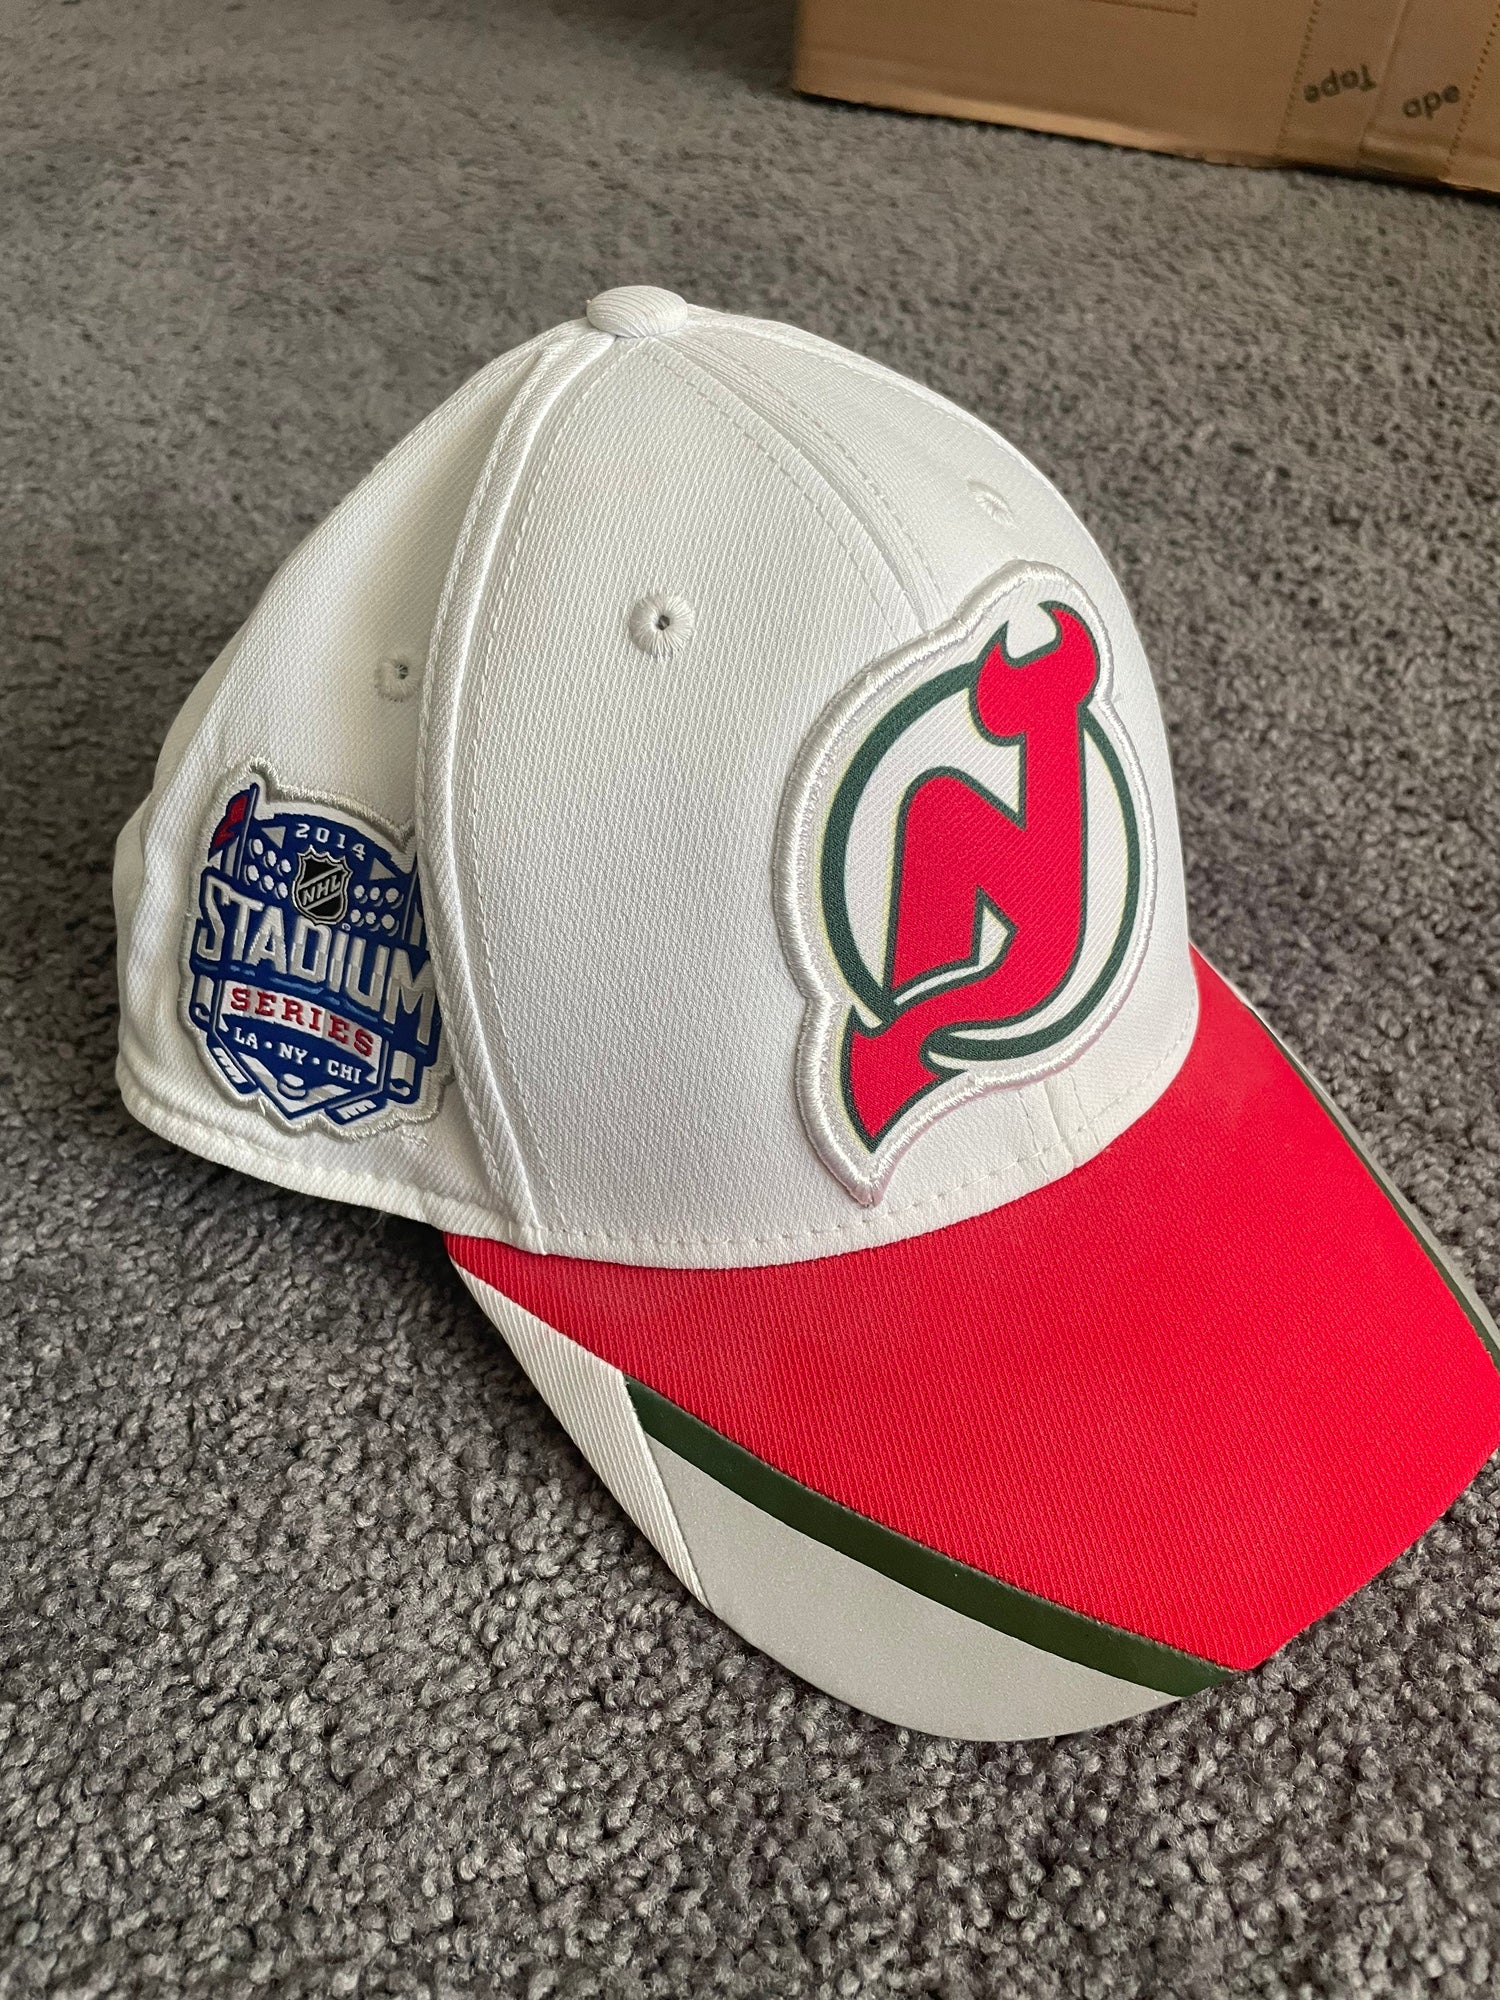 New Jersey Devils NHL Camouflage Camo Strapback Hat